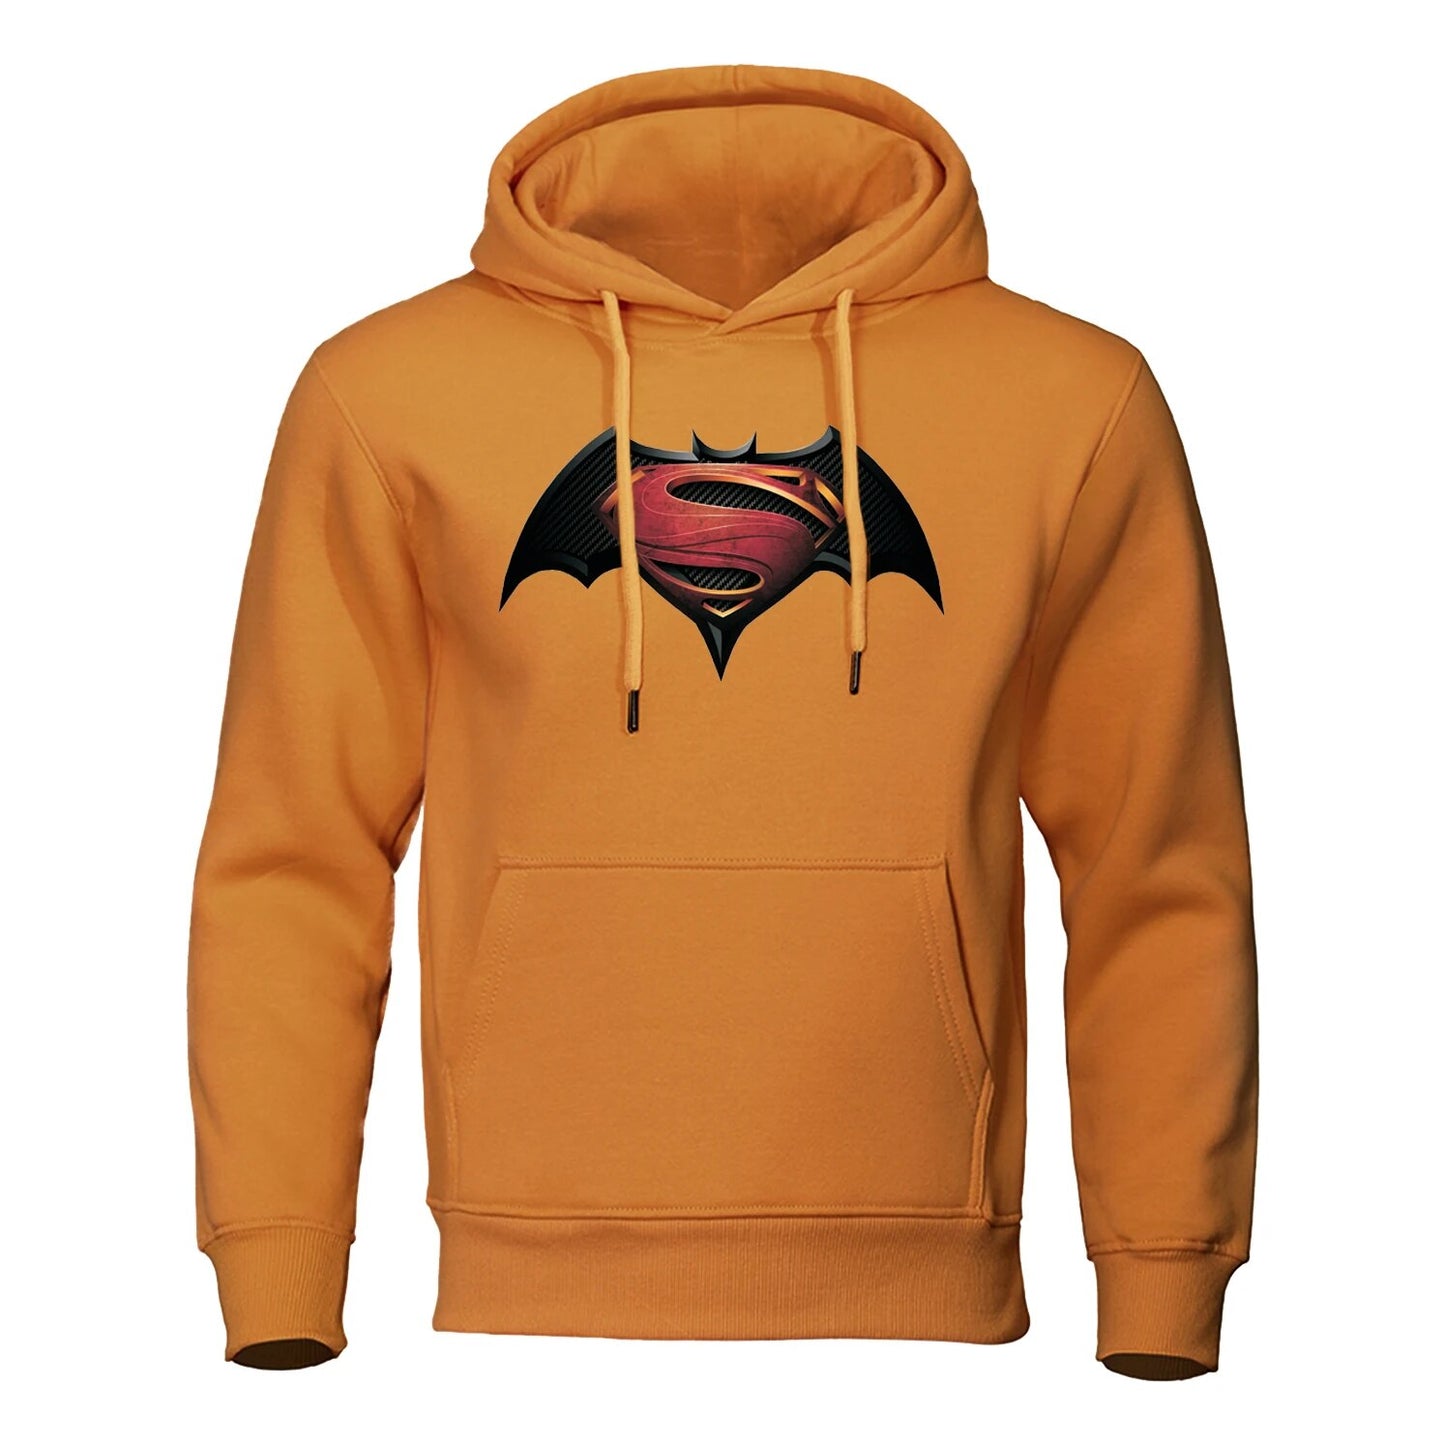 Superman / Batman - Super-Bat Hoodie - Men's Casual Streetwear-